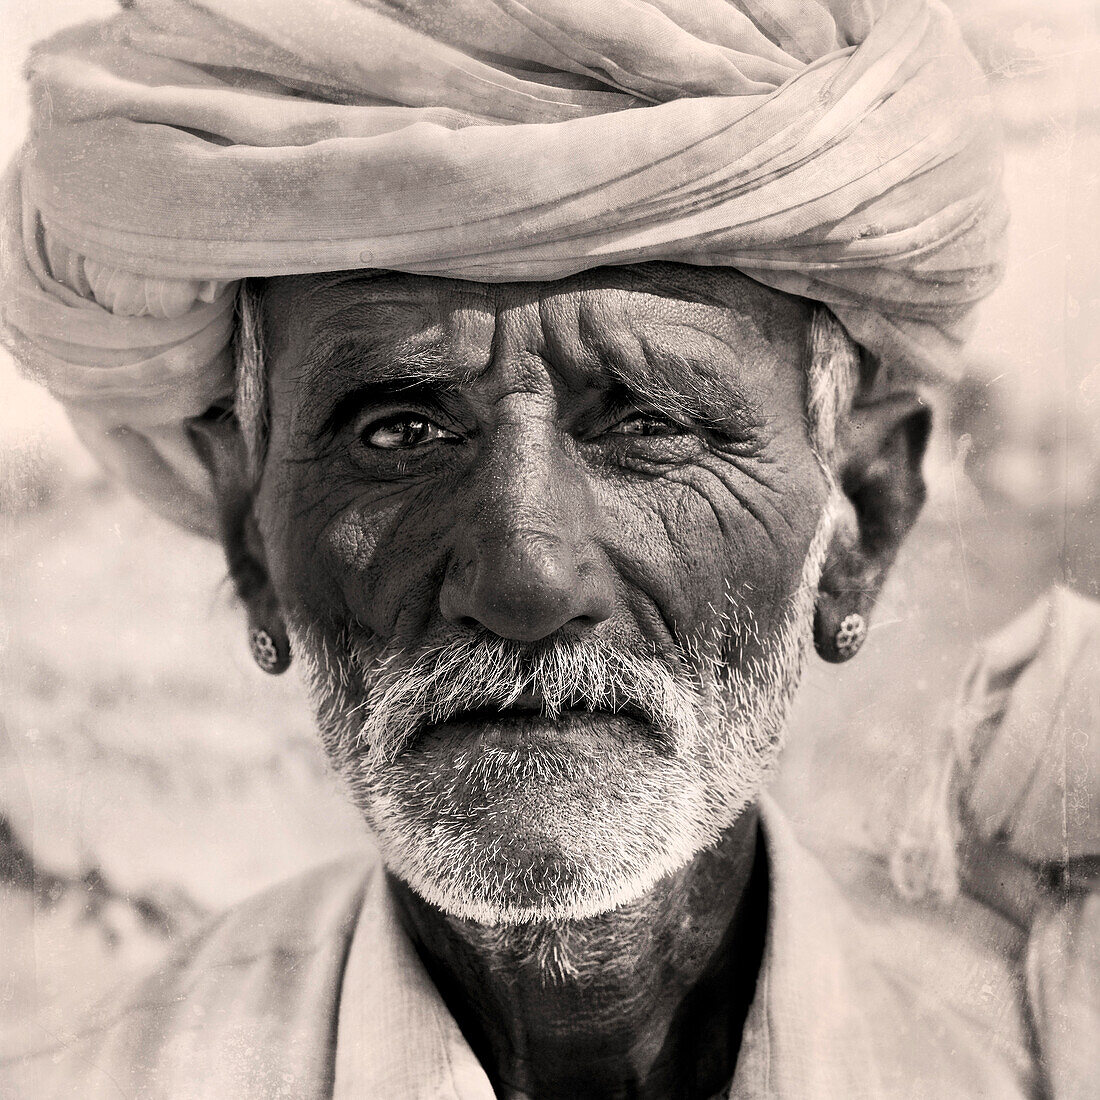 Jodhpur farmer portrait, Rajasthan, India